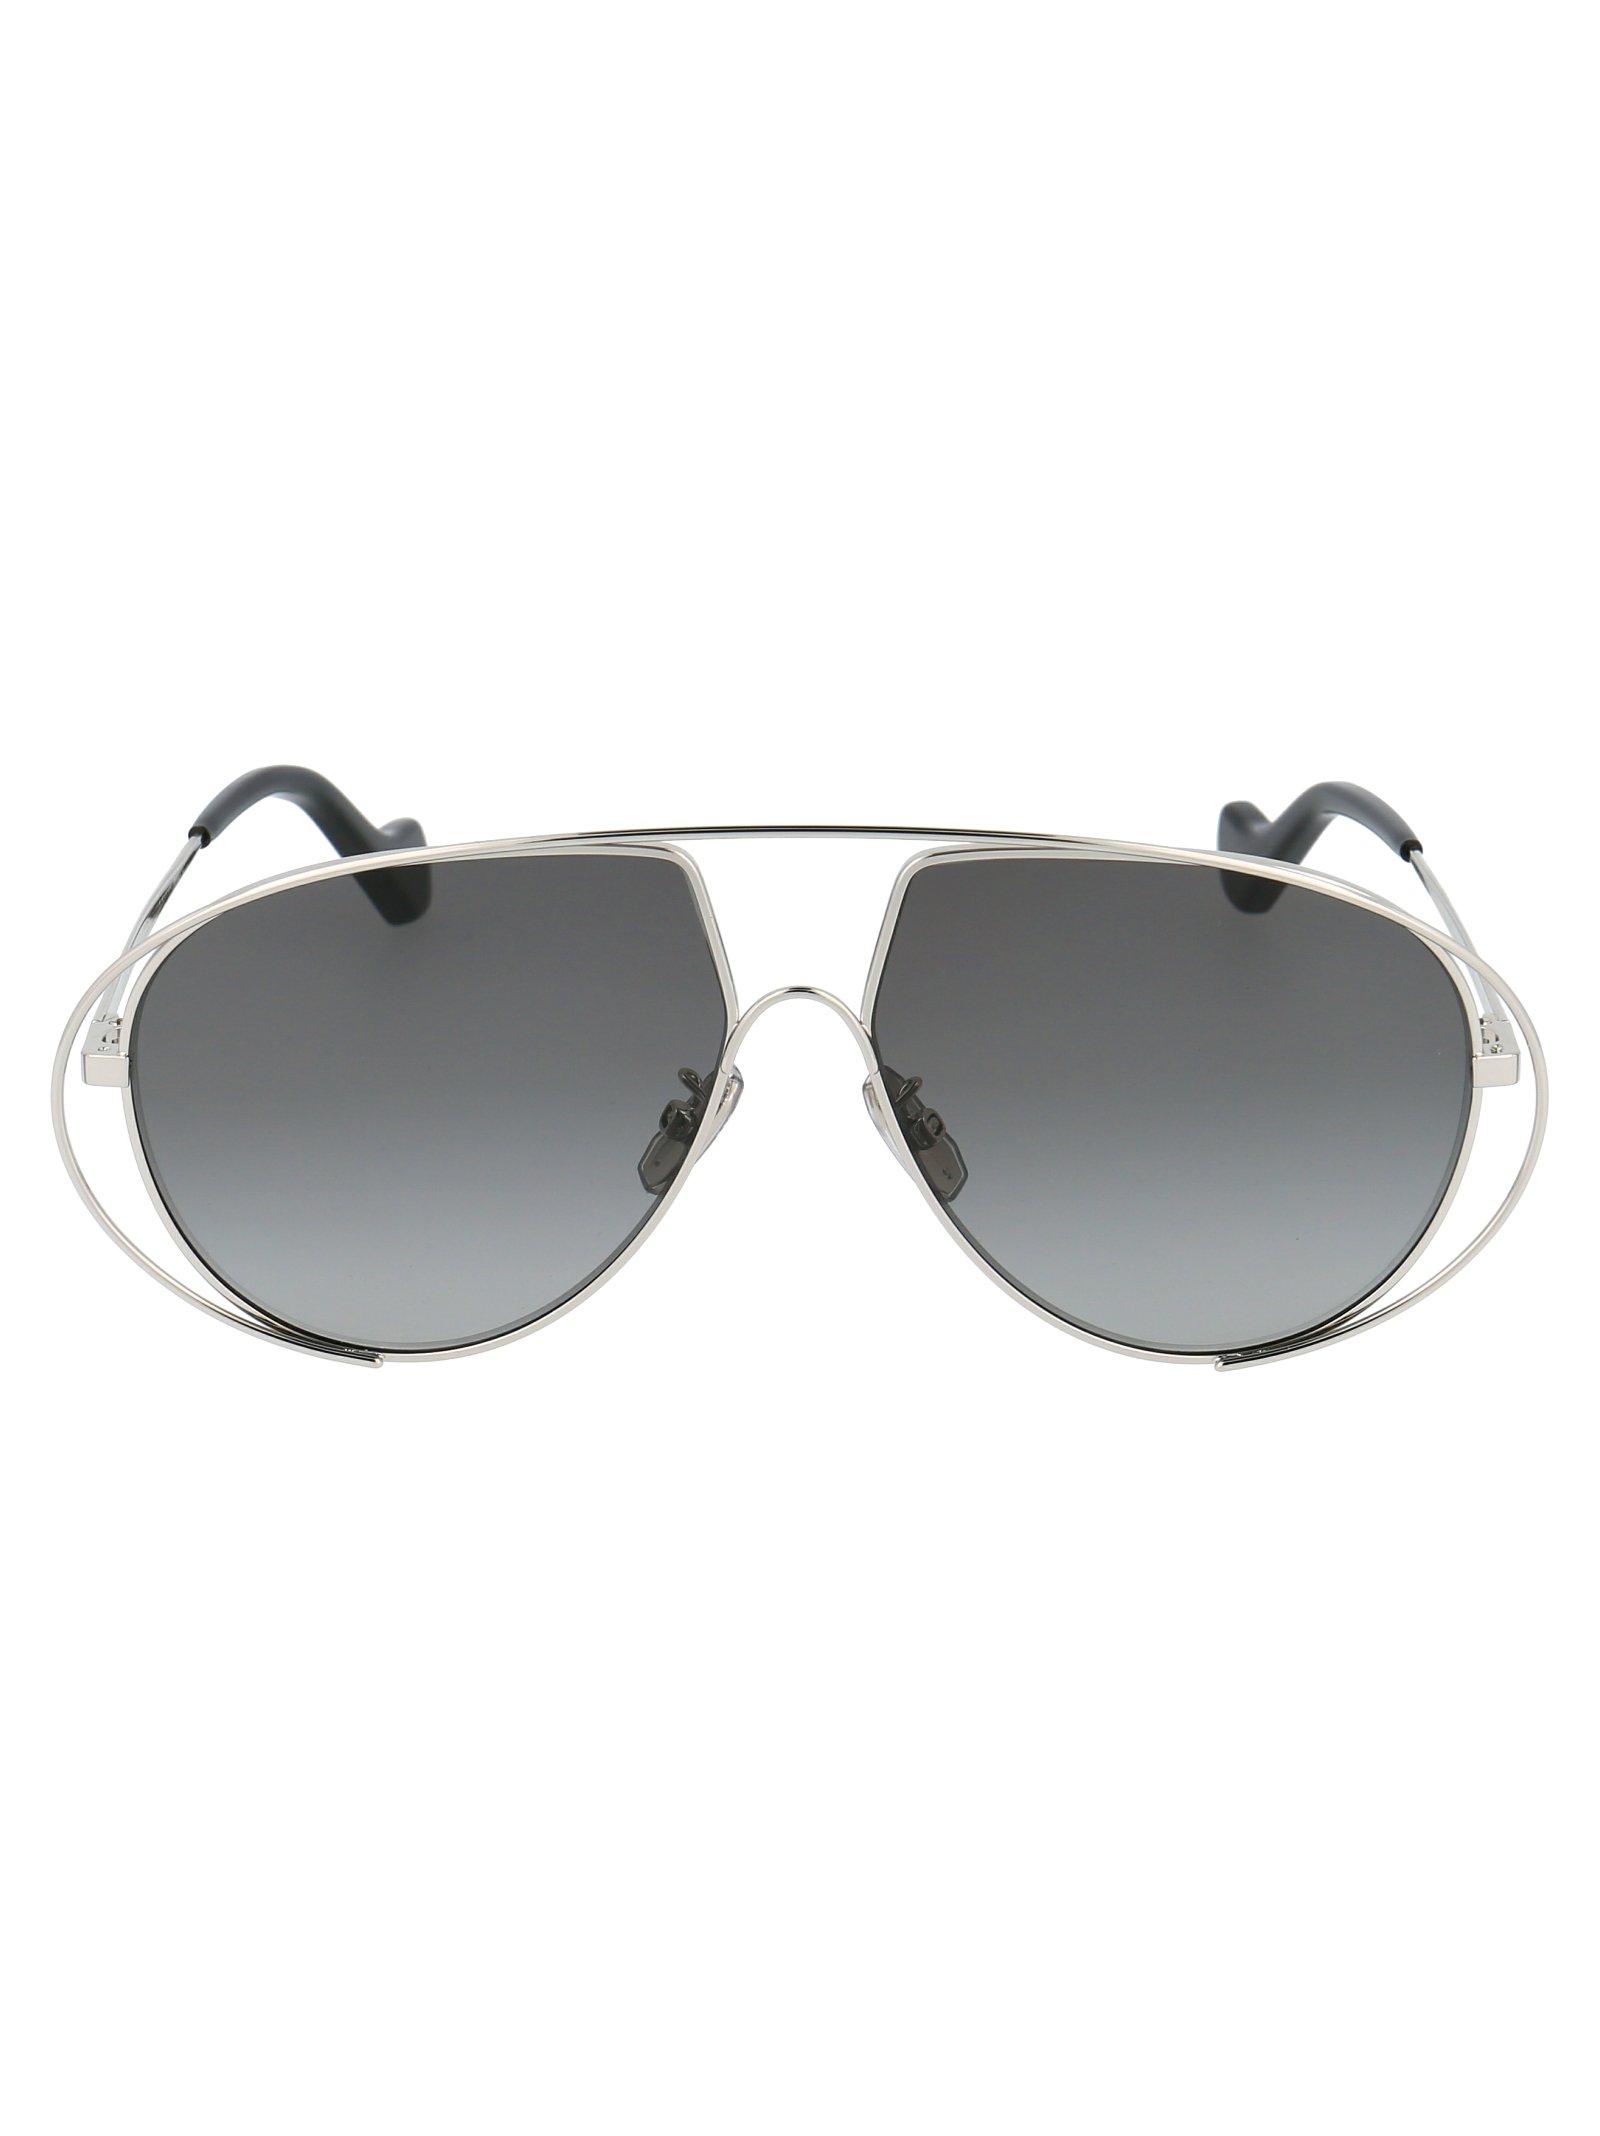 Loewe Aviator Sunglasses in Silver (Metallic) - Lyst